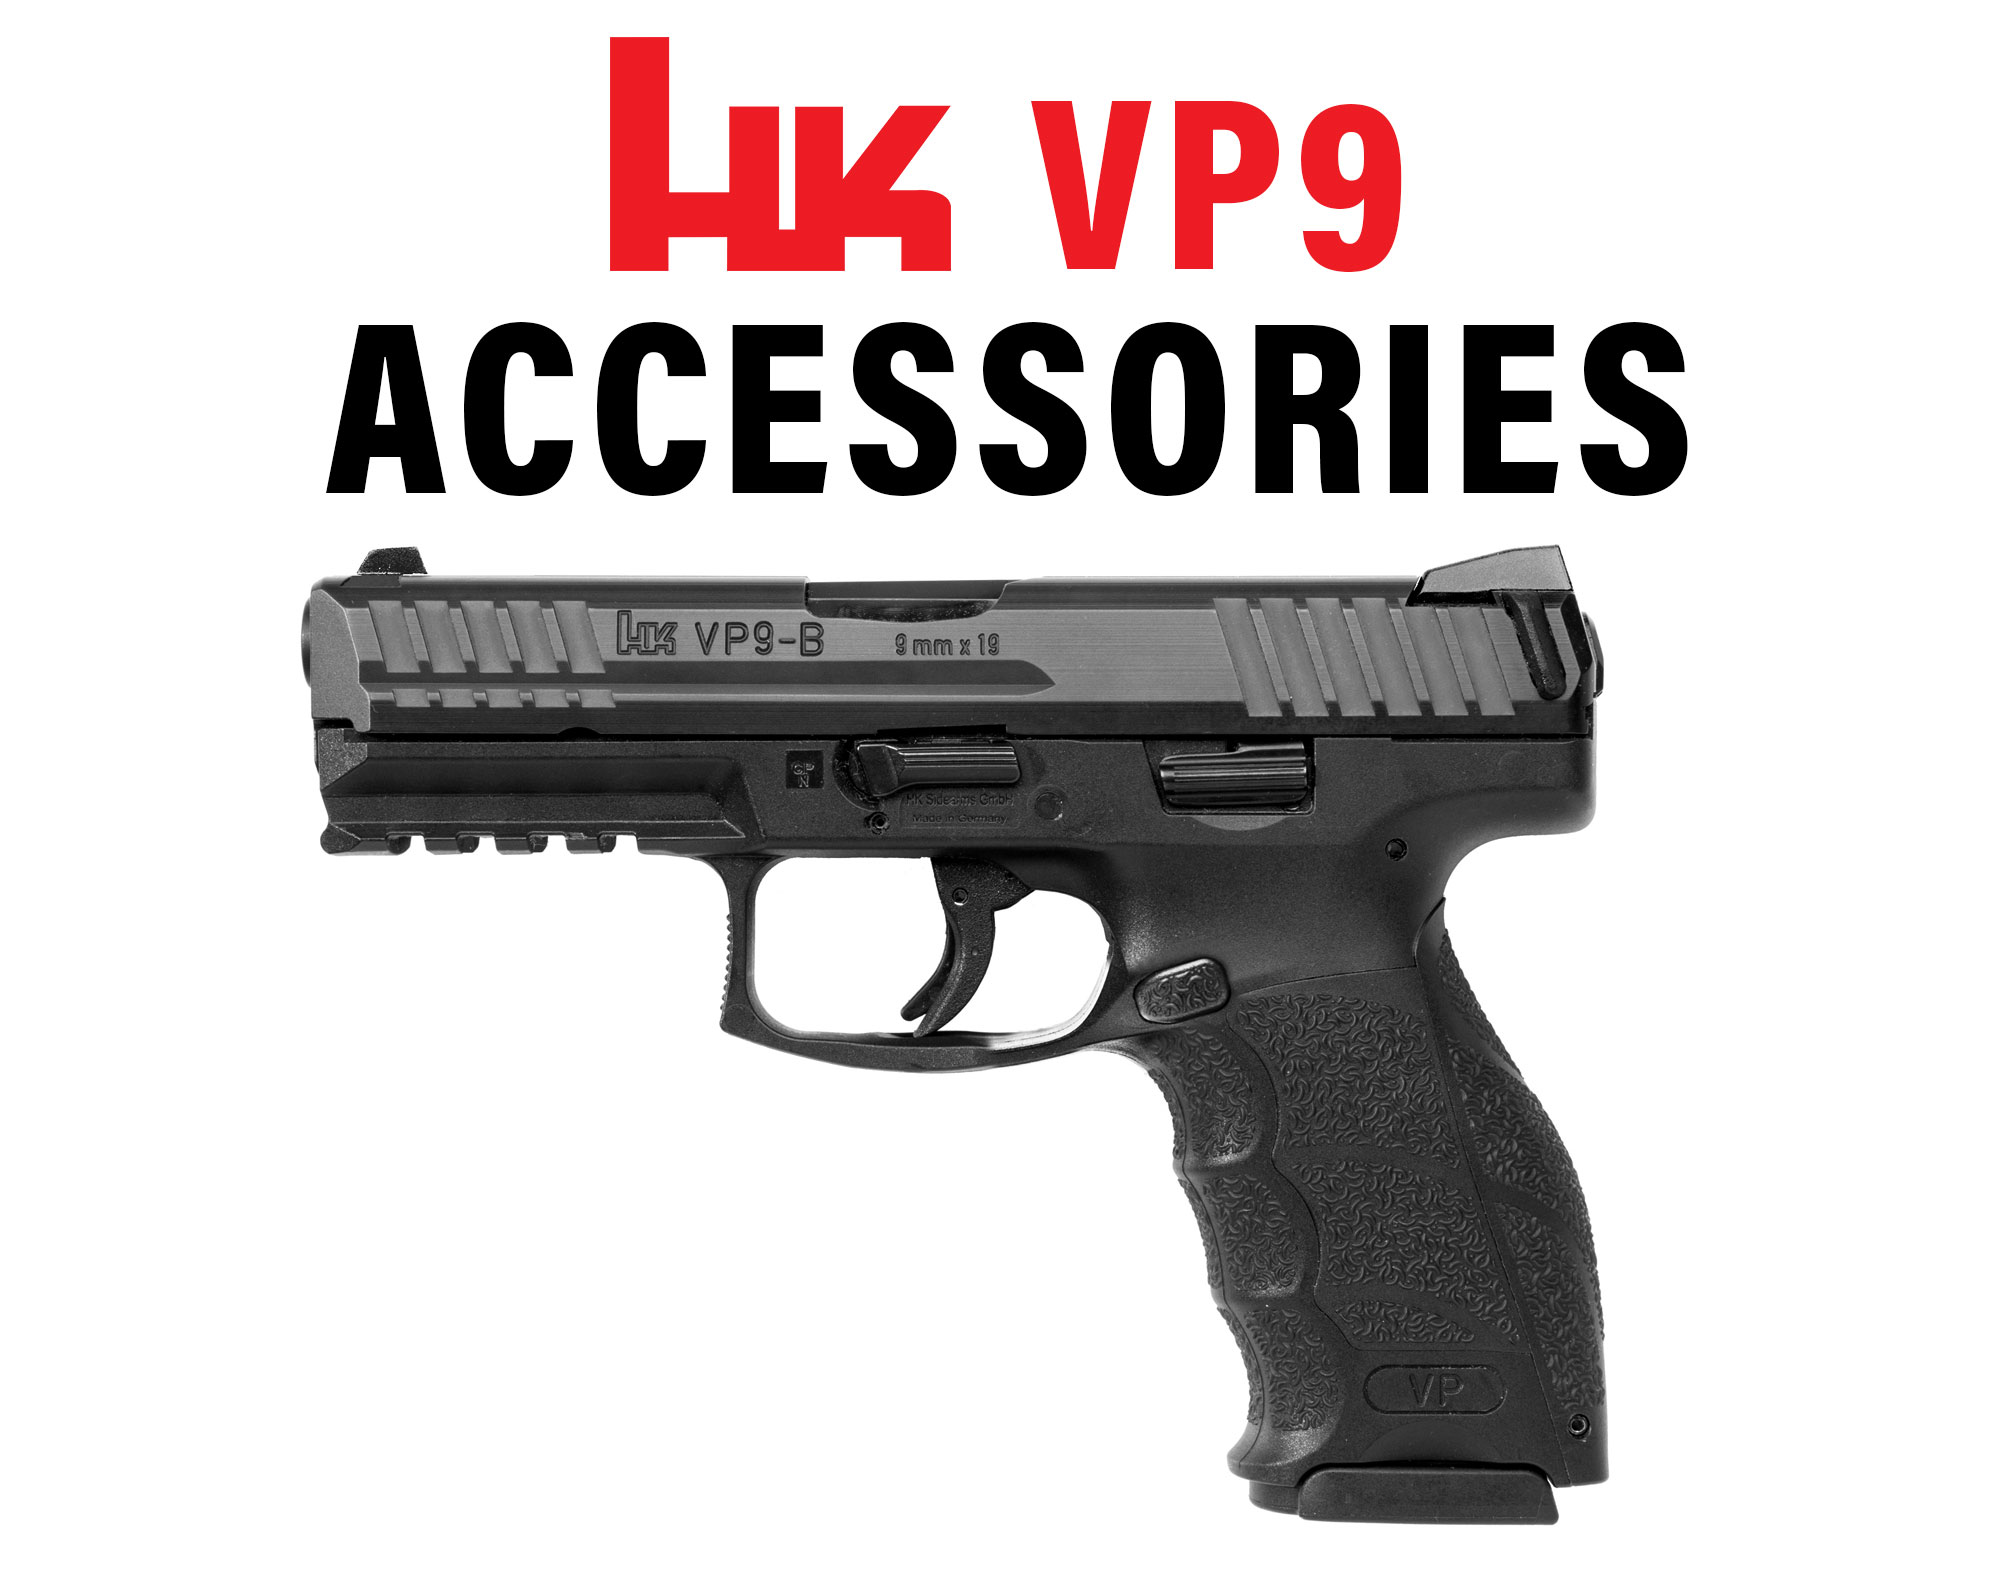 HK VP9 Accessories